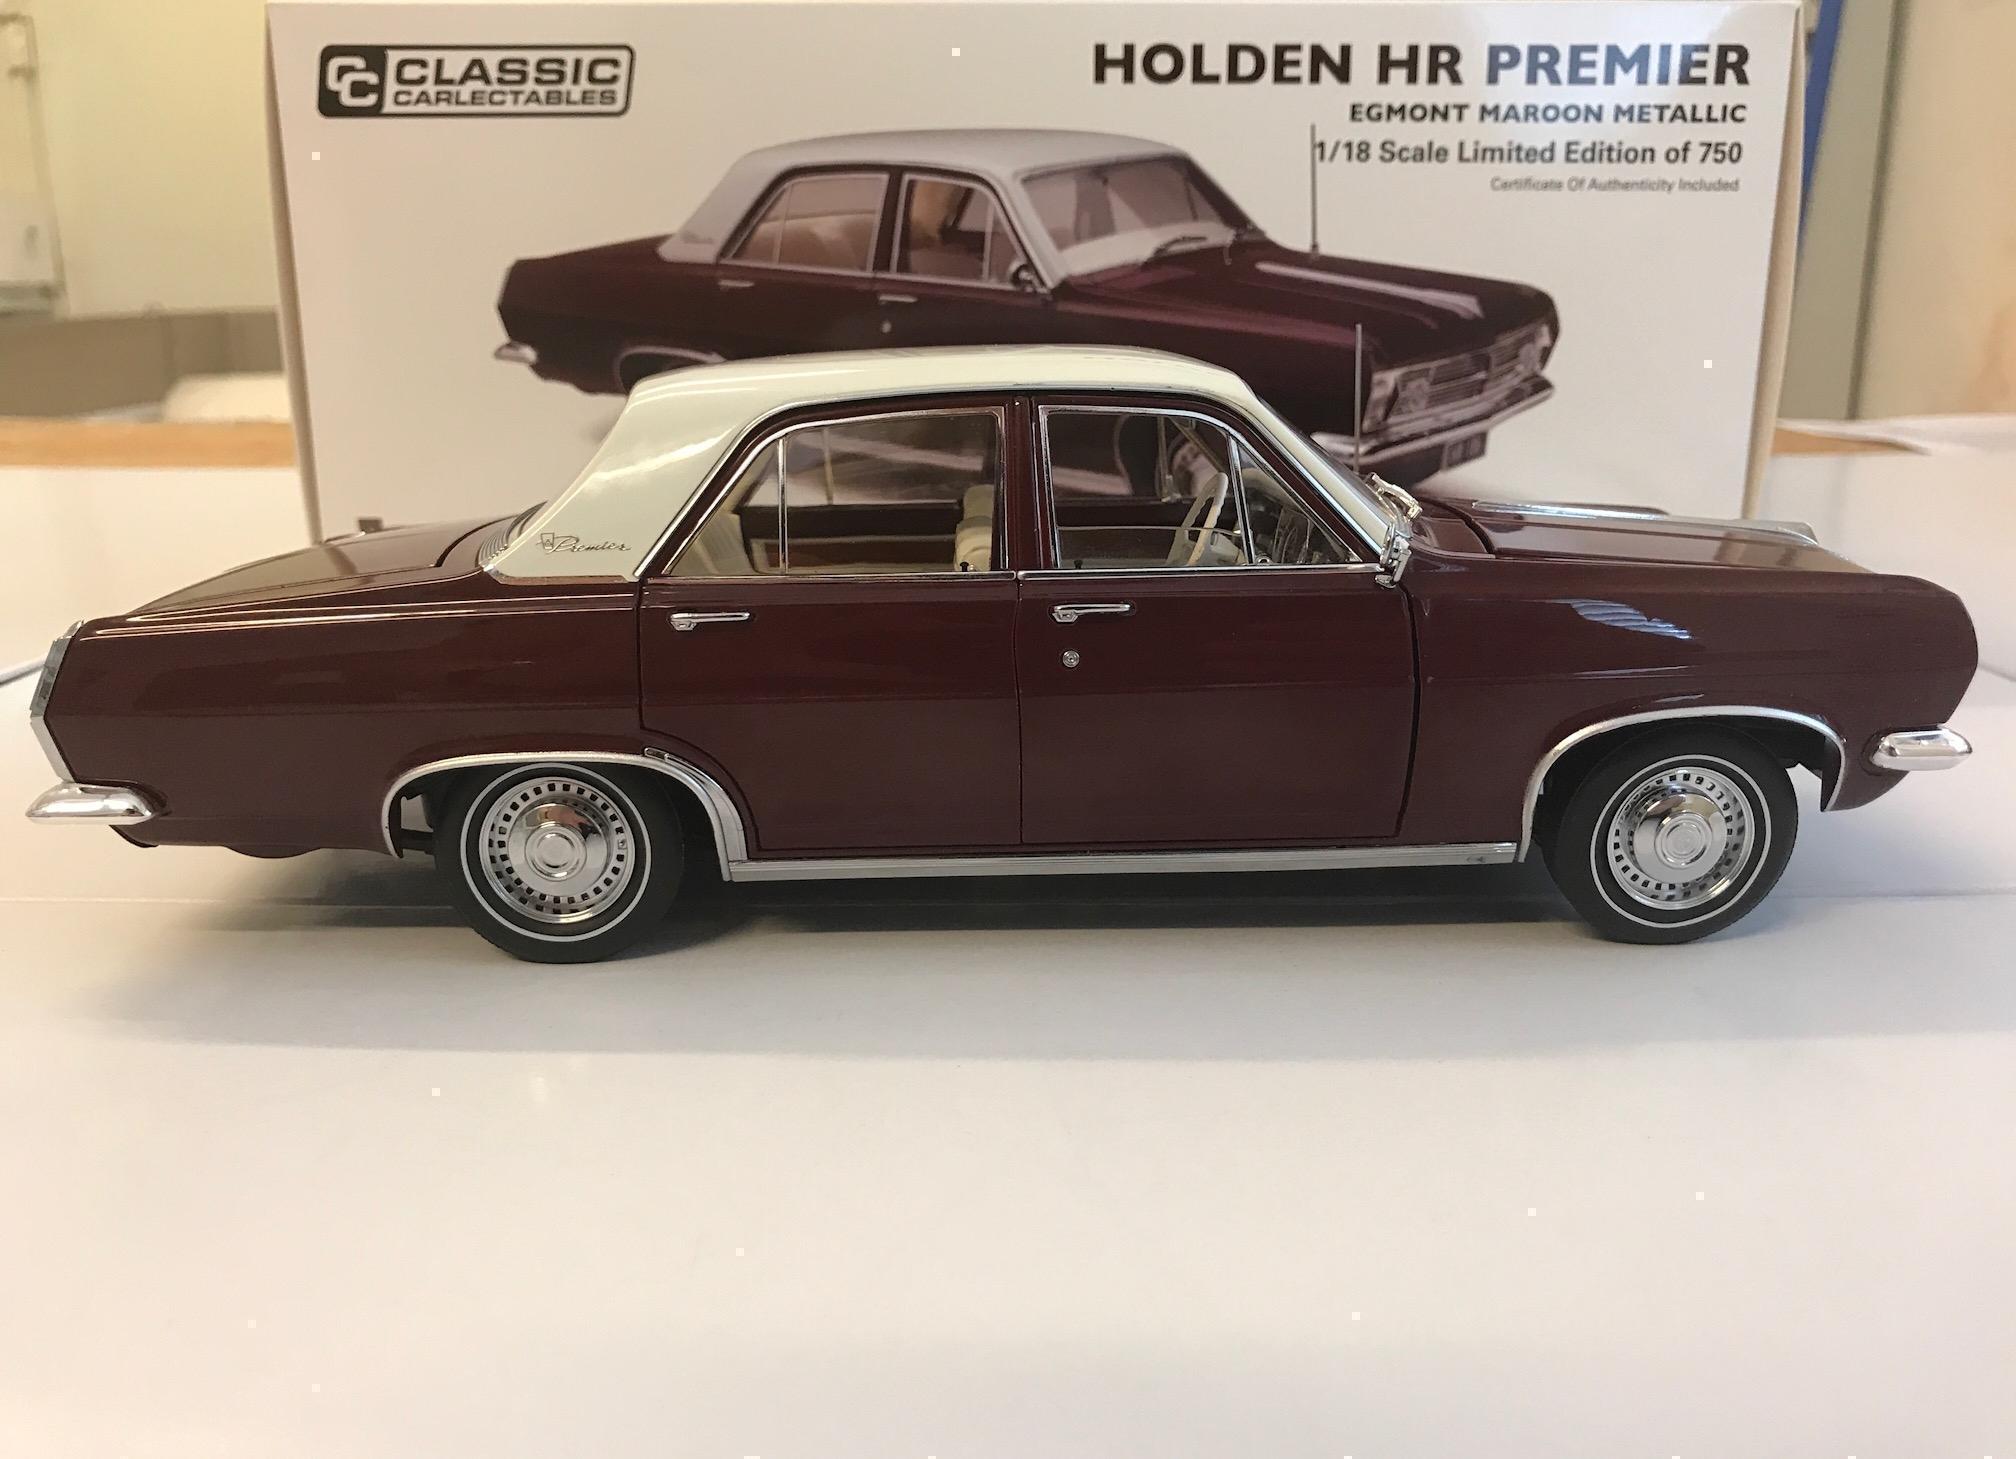 Holden HR Premier